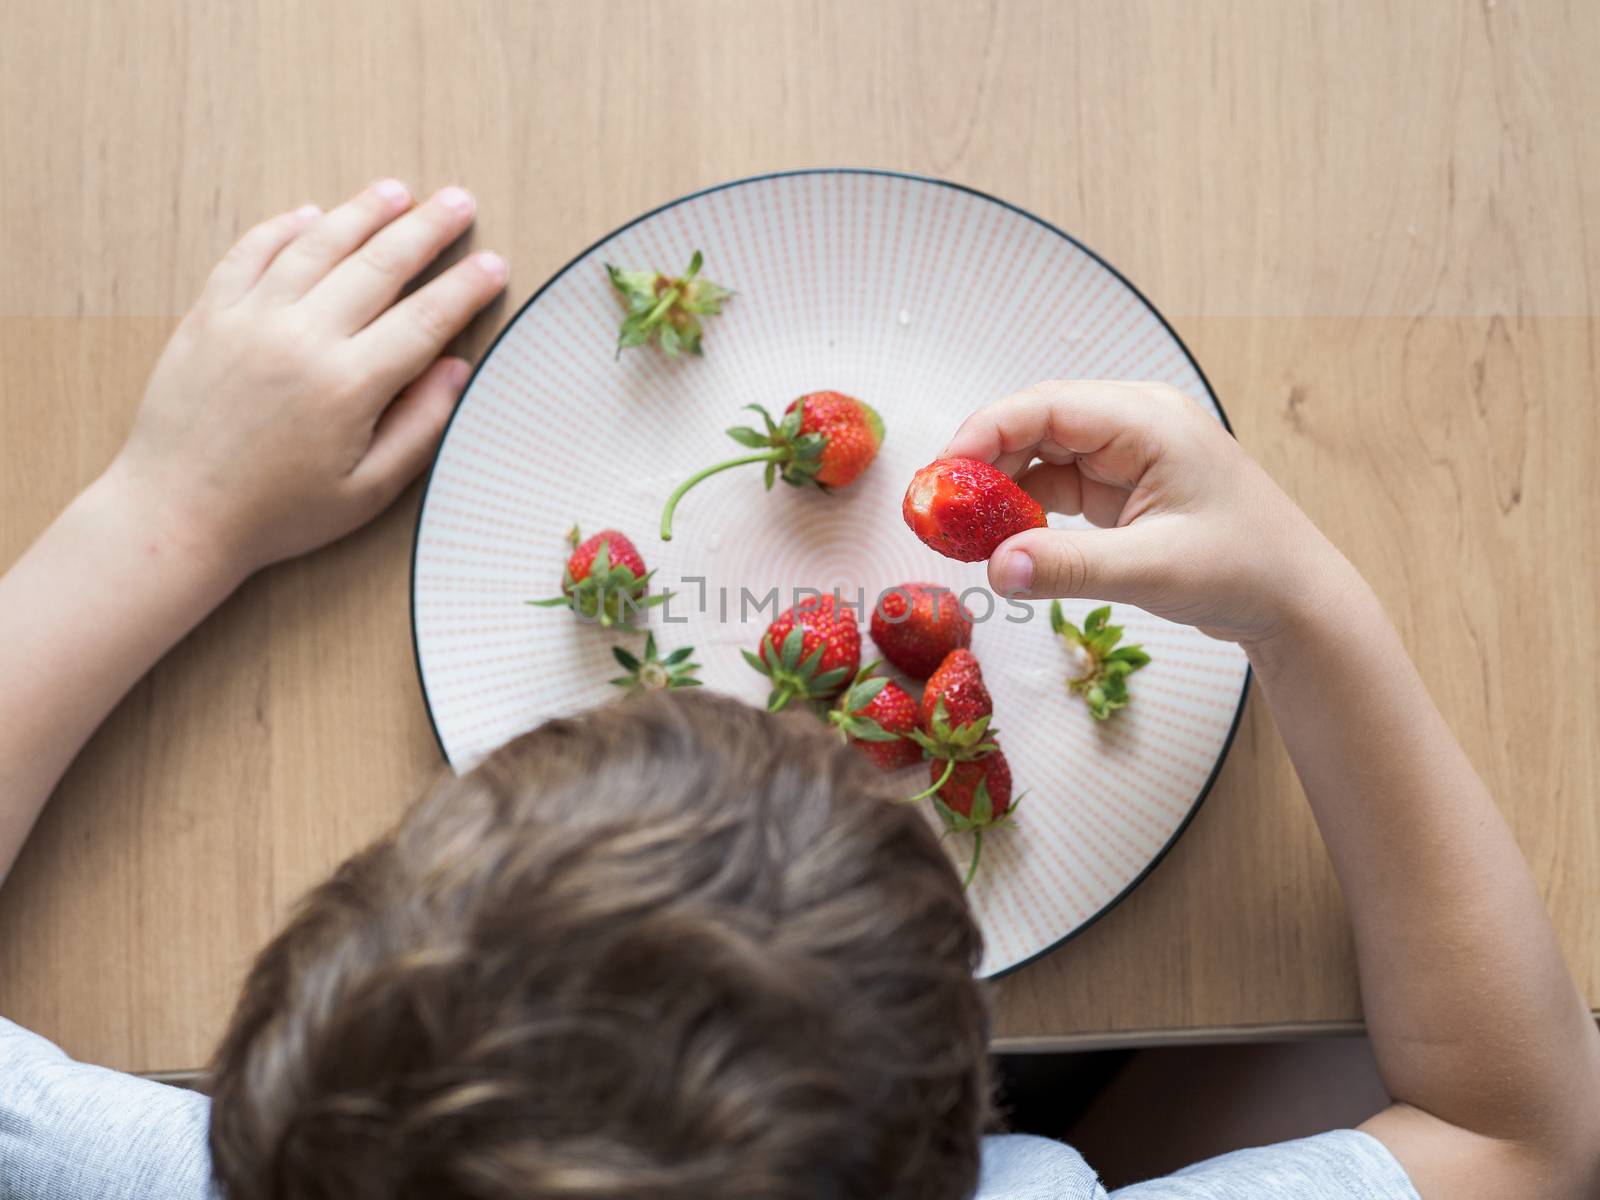 Little boy eats fresh organic strawberry with relish by fascinadora